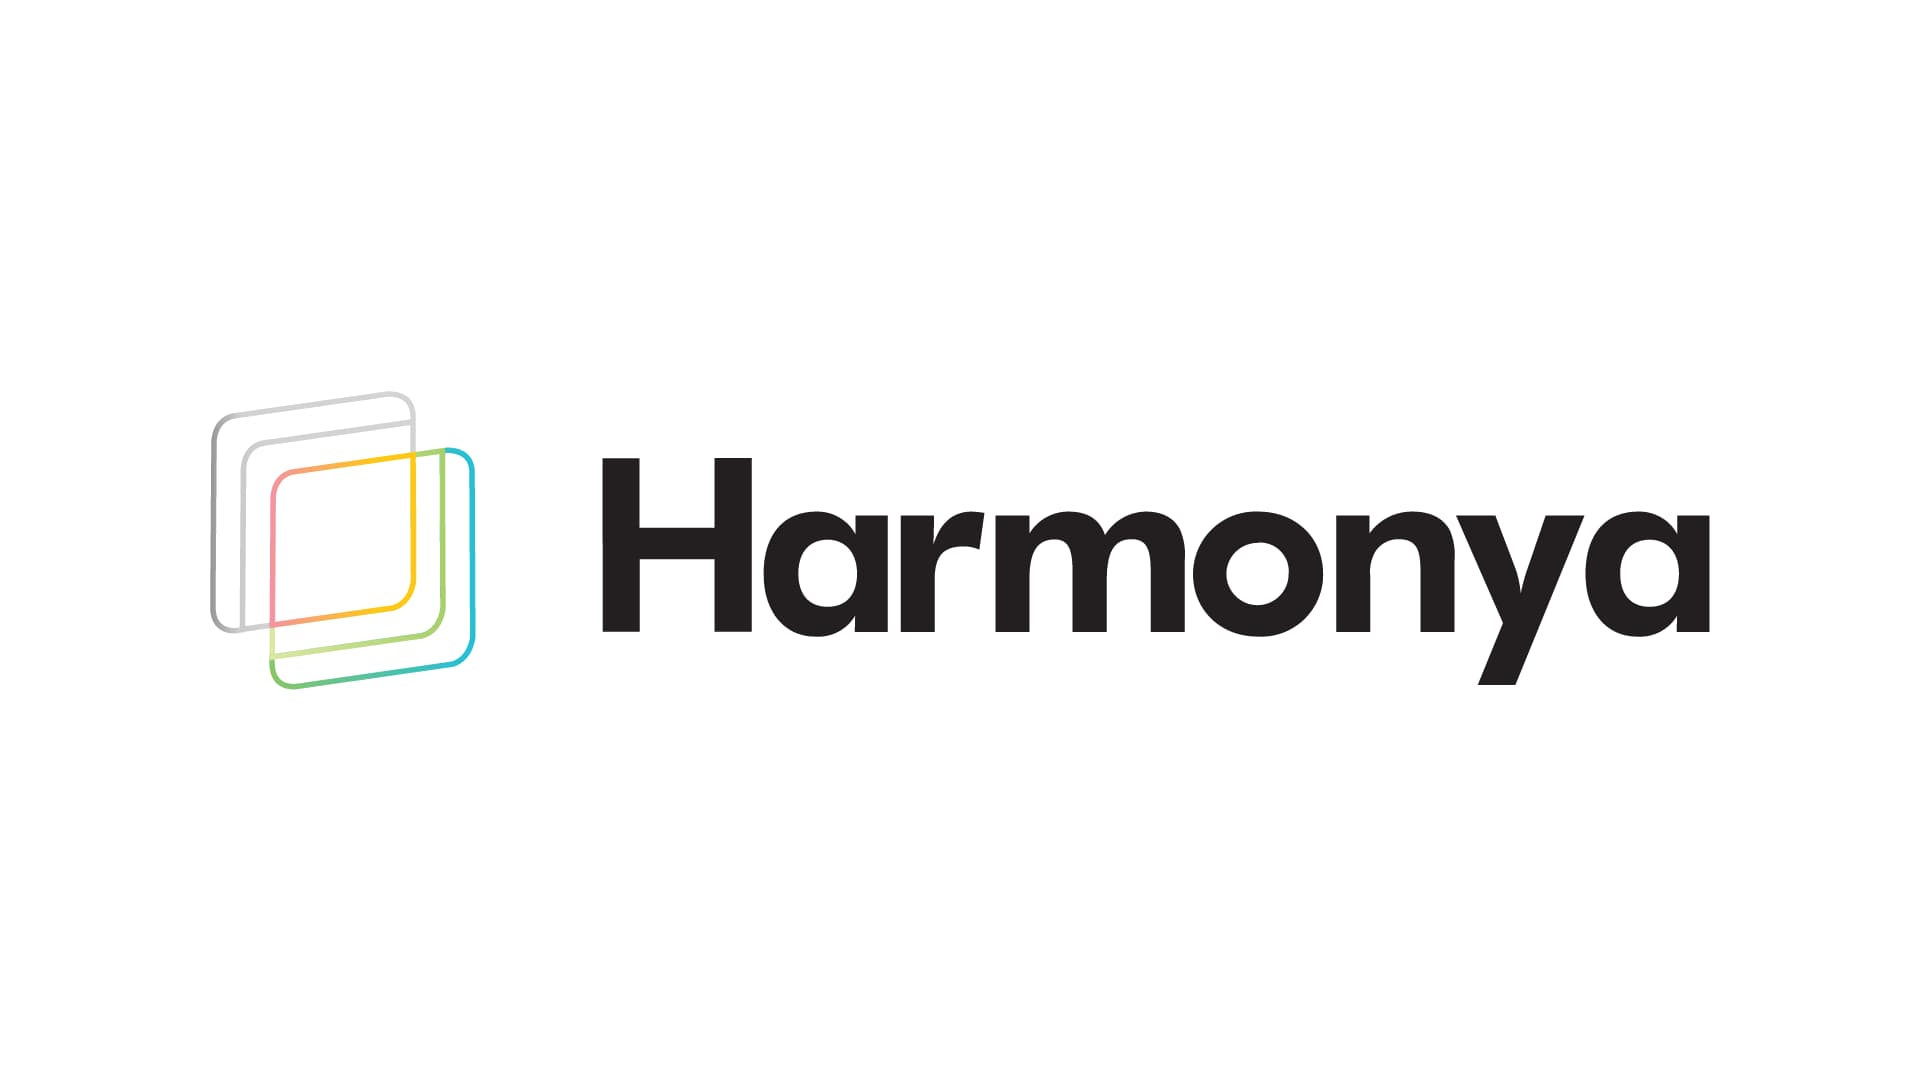 Harmonya、CPGブランド向けの製品データ解析のために2,000万ドルを調達